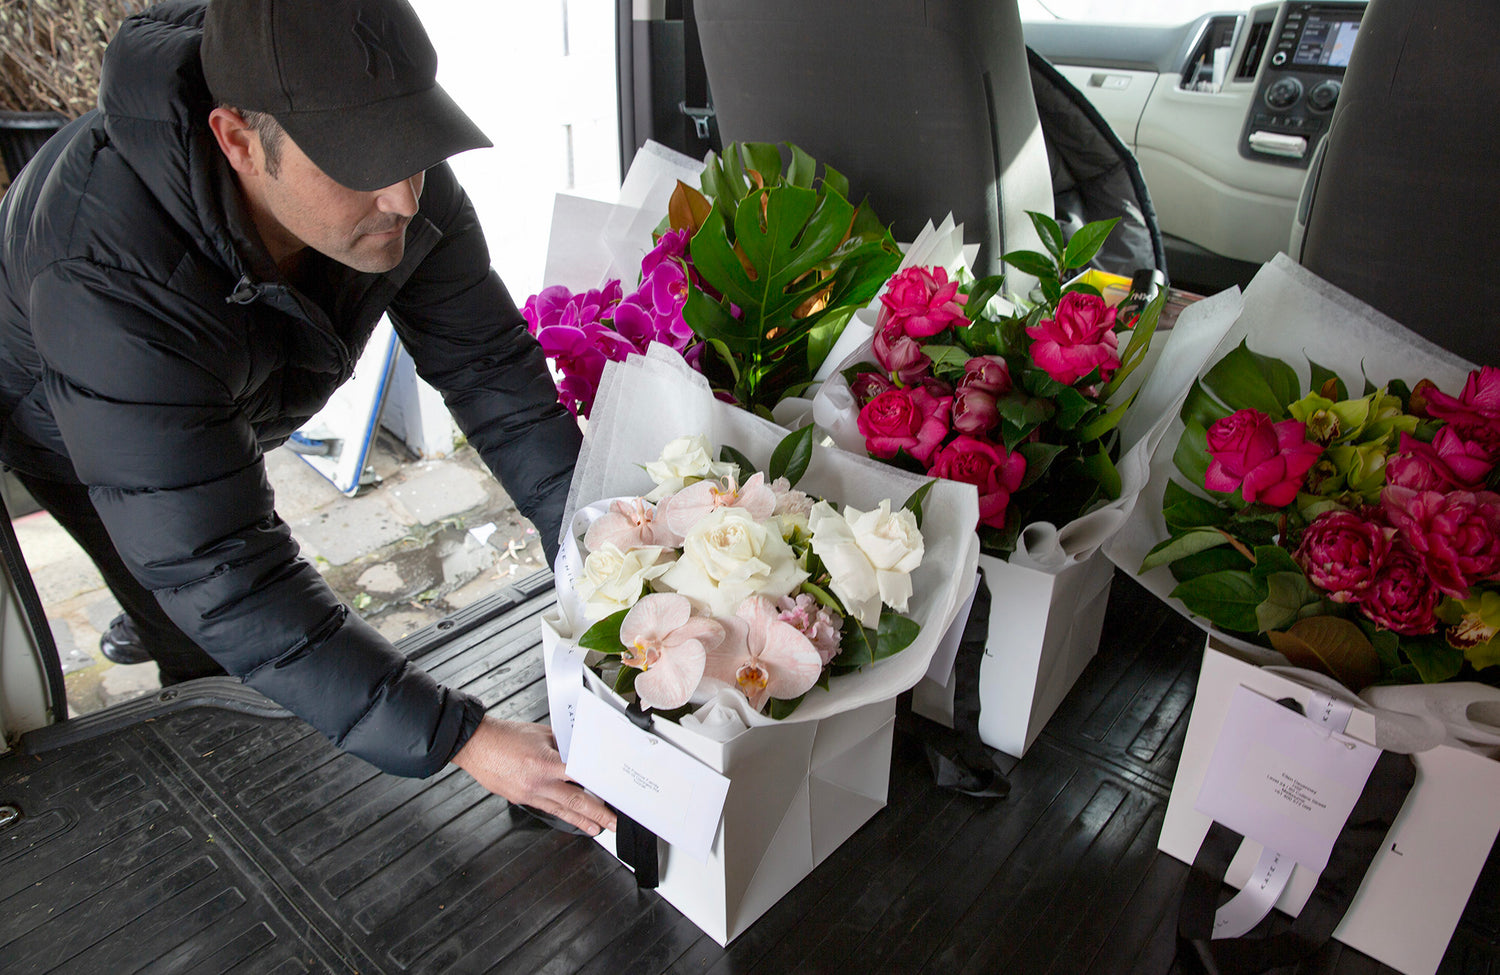 Flower delivery driver loading flower arrangements into back of a delivery van